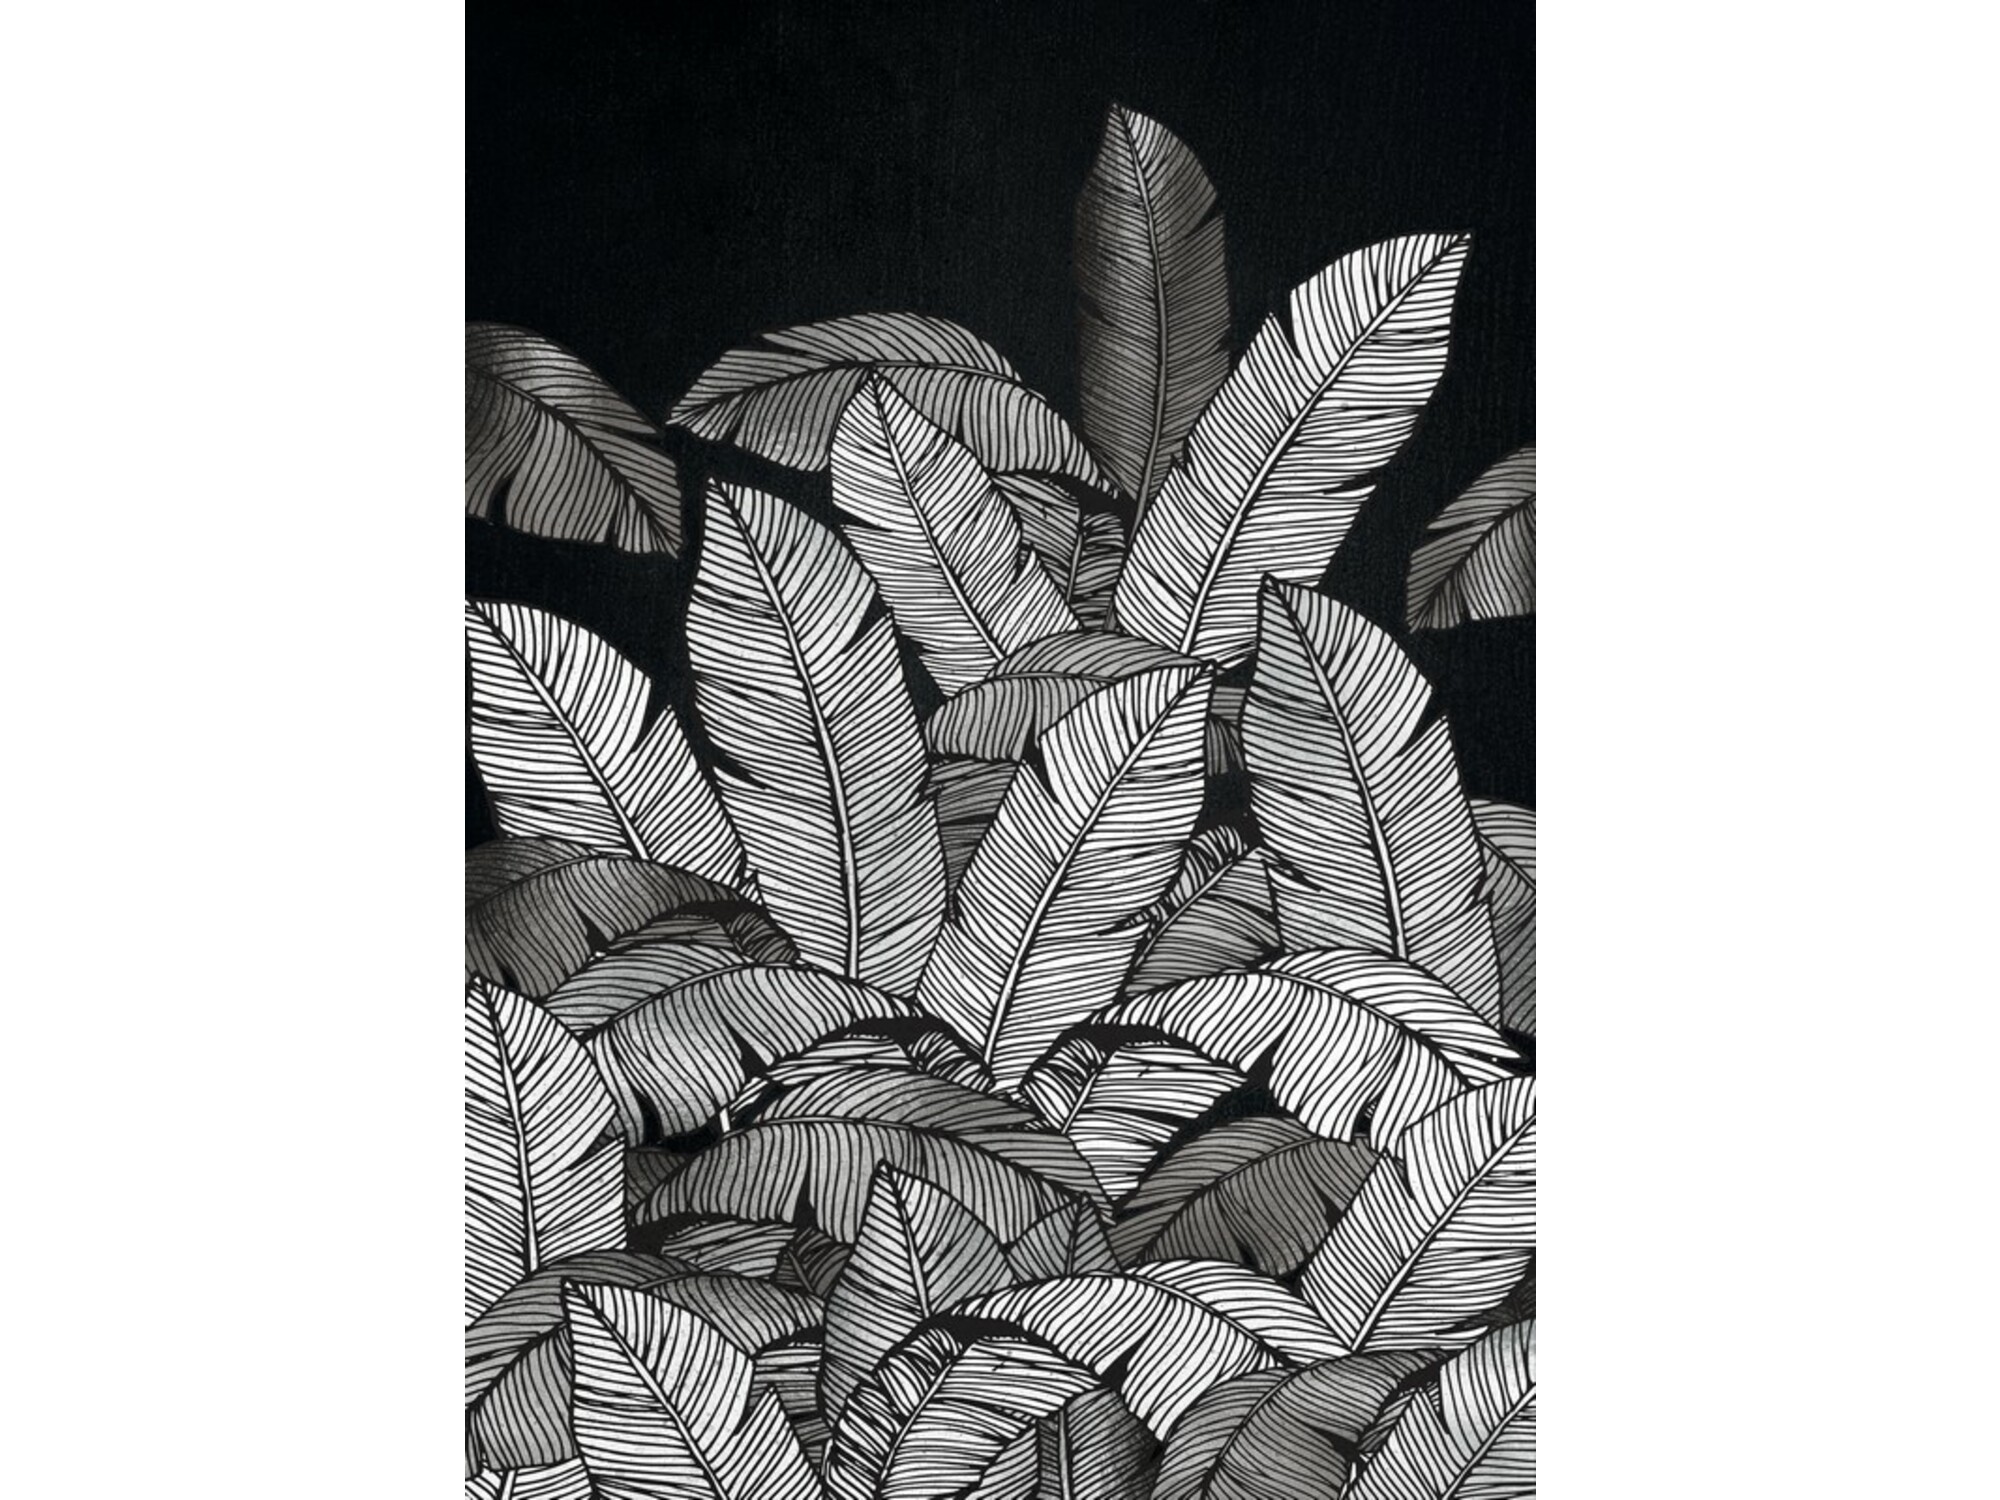 DekorDom Slika 60x90cm Toif22710 - Leaves Black White